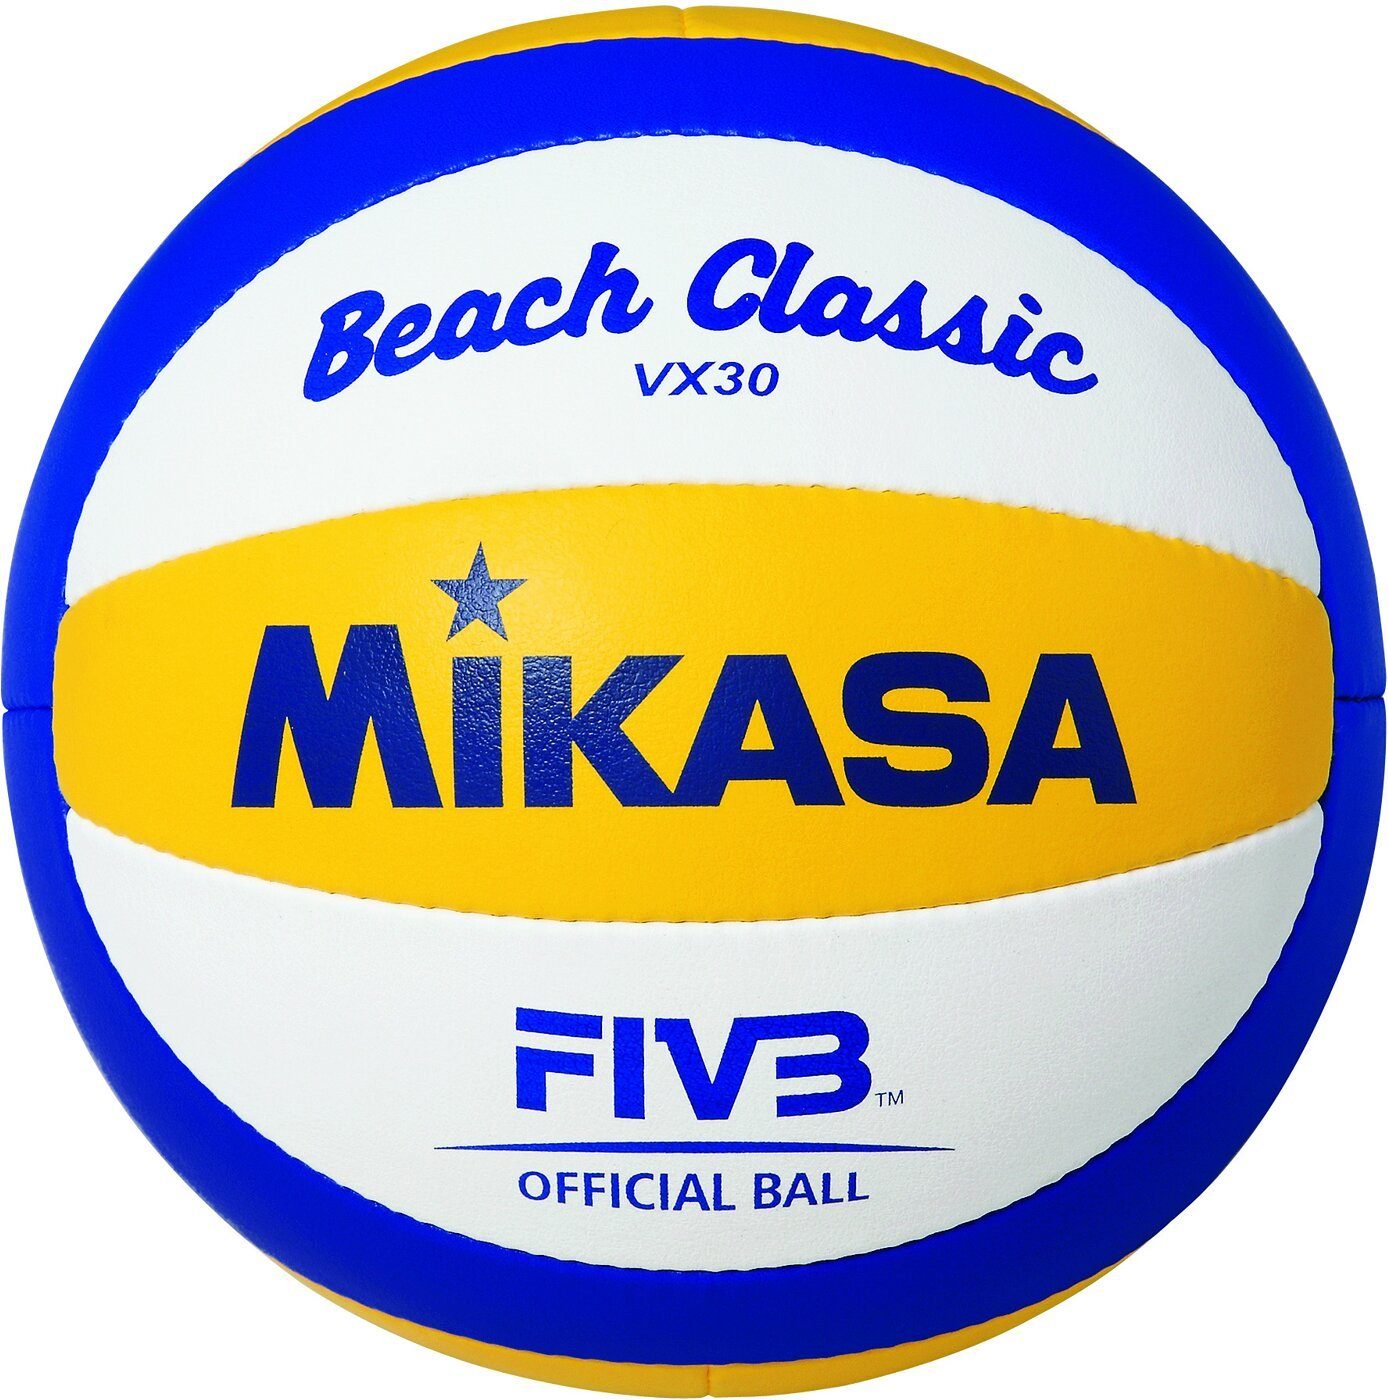 Beachvolleyball Classic Beach VX30 Mikasa